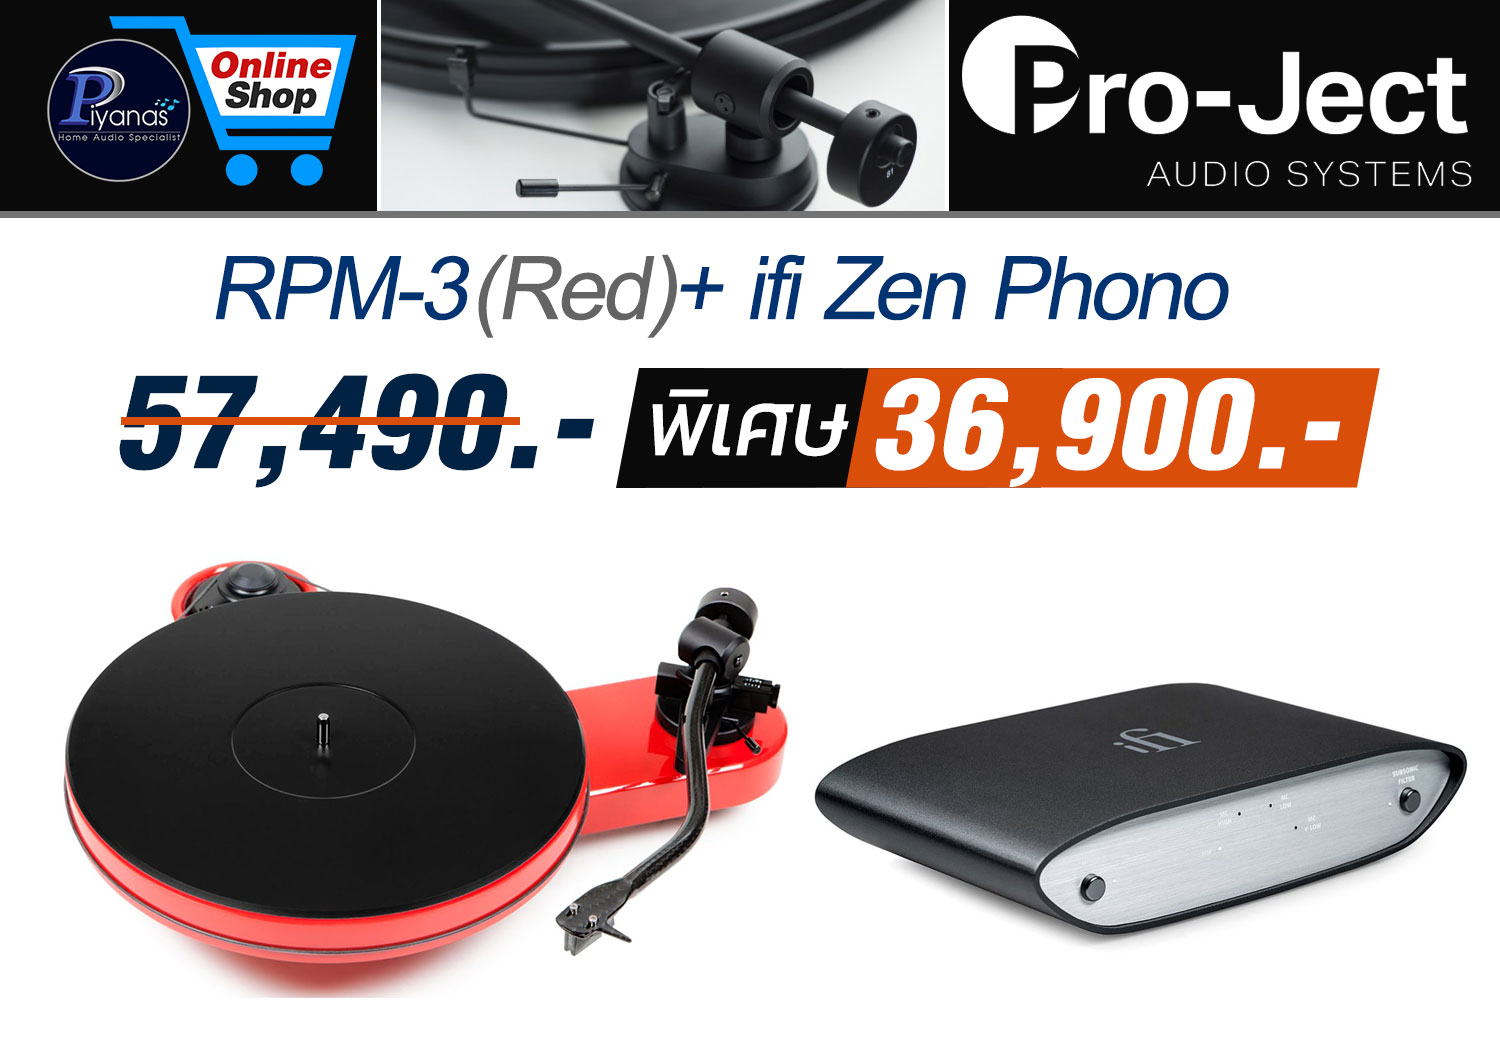 RPM-3 Carbon (Red)
+ ifi Zen Phono